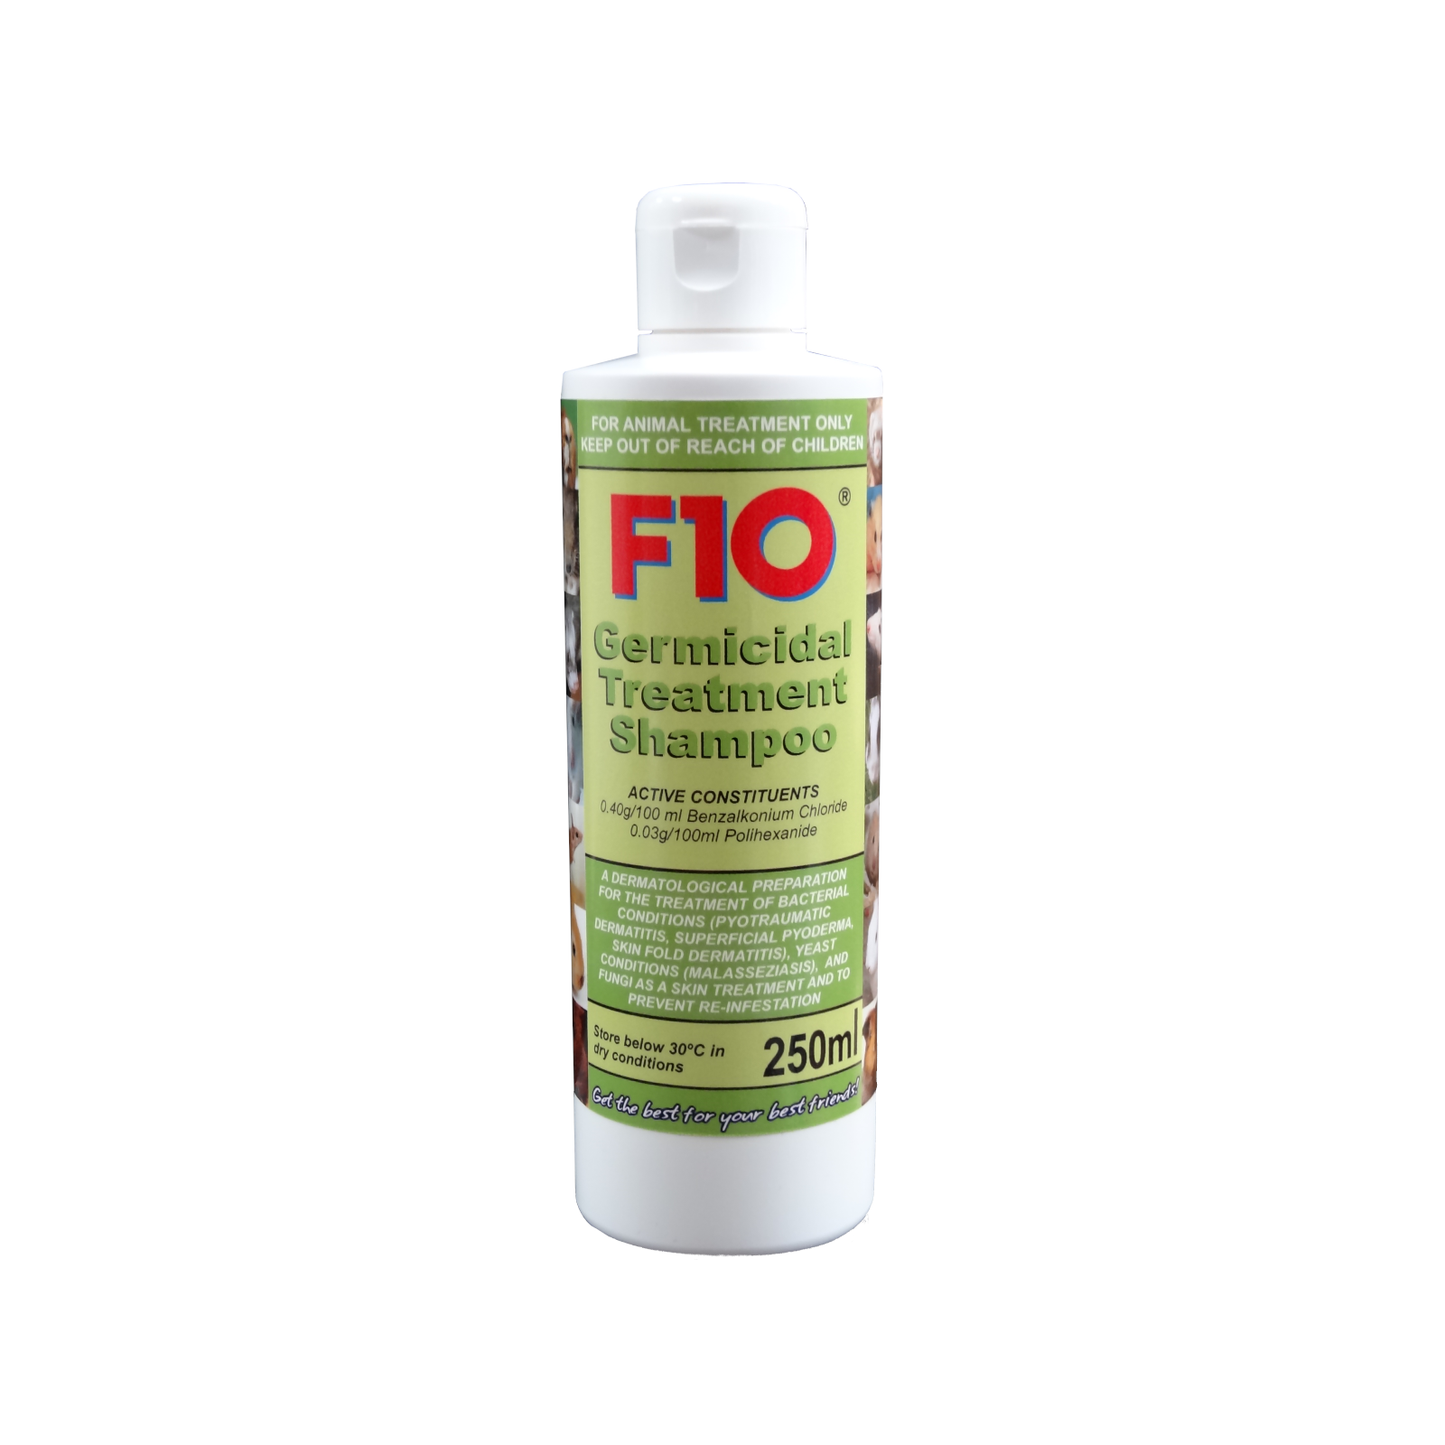 A bottle of F10 Germicidal Treatment Shampoo